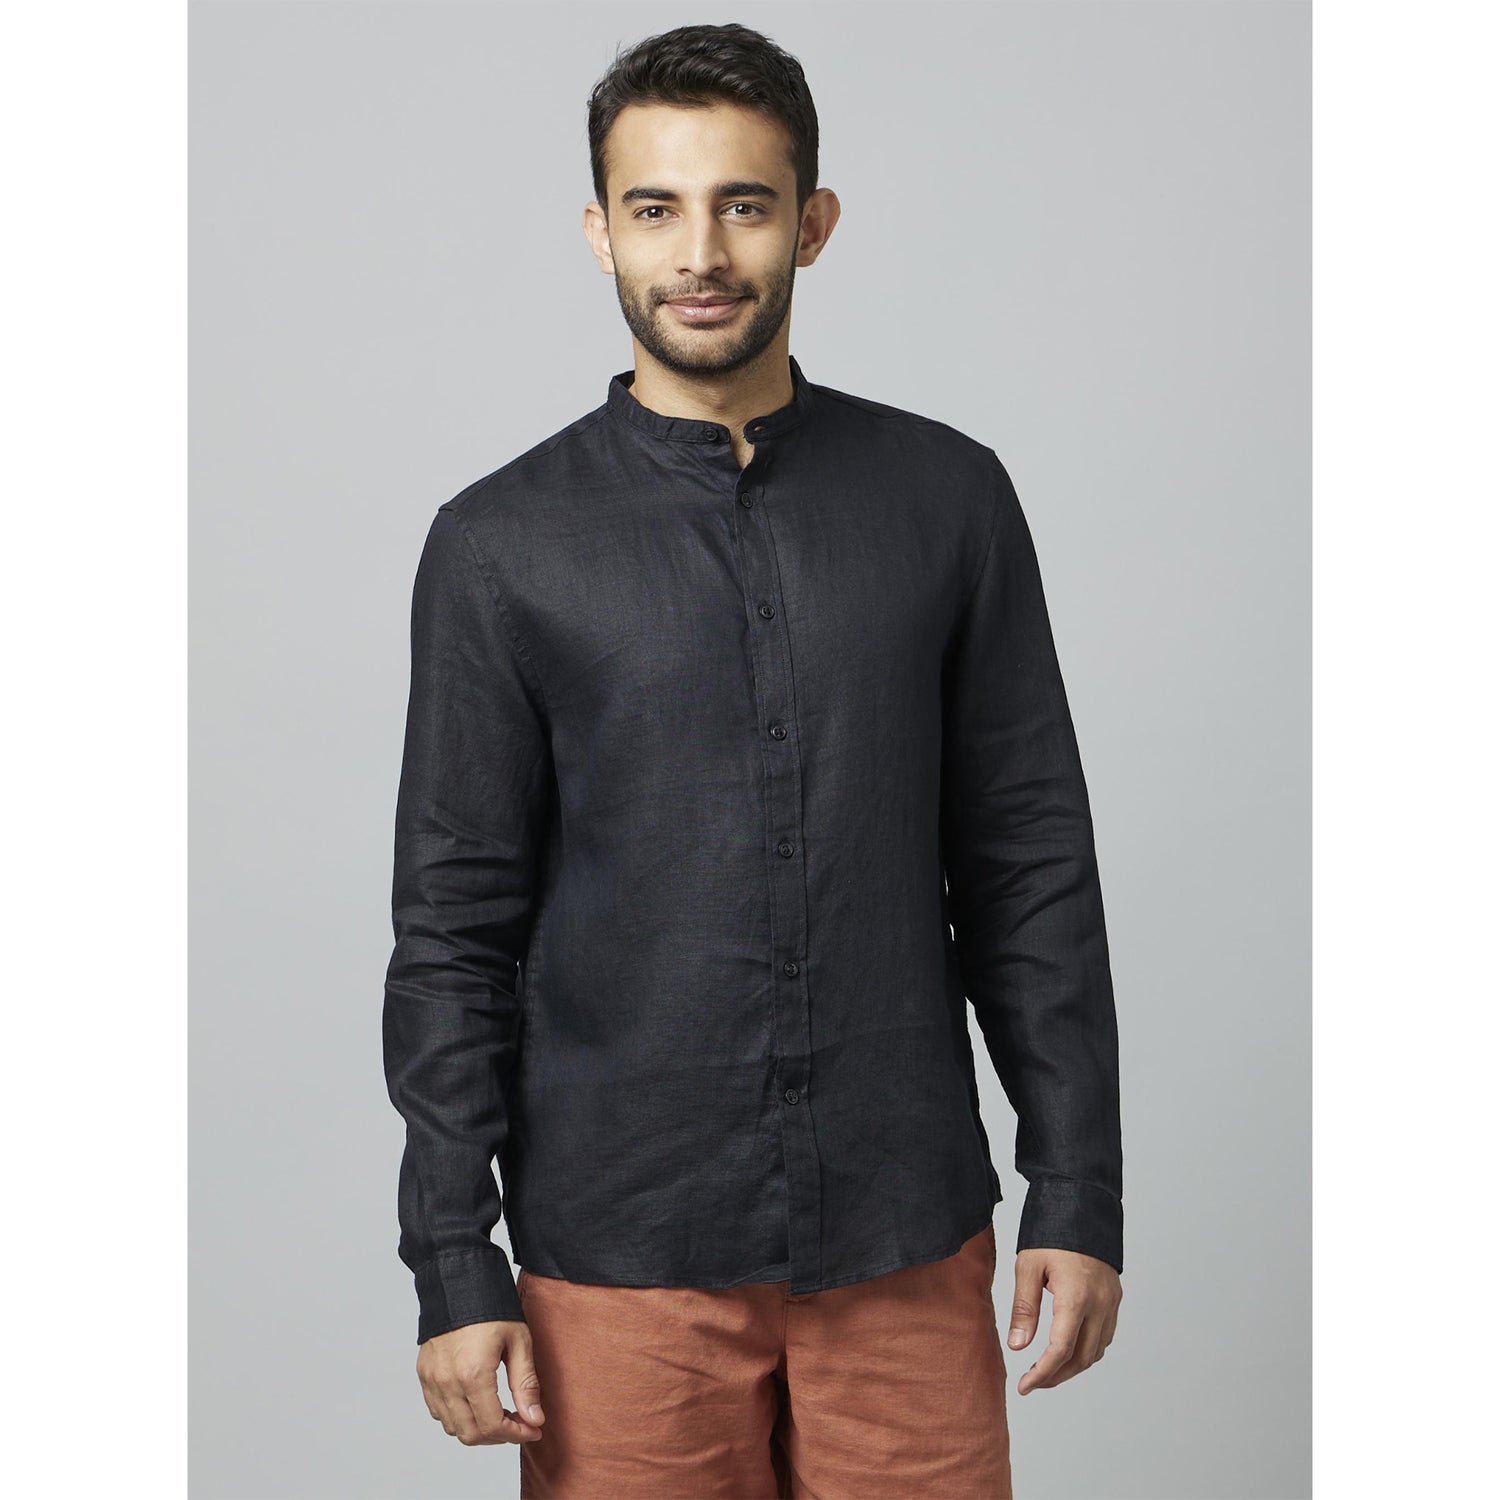 Black Classic Mandarin Collar Linen Casual Shirt (DAMAOLIN)